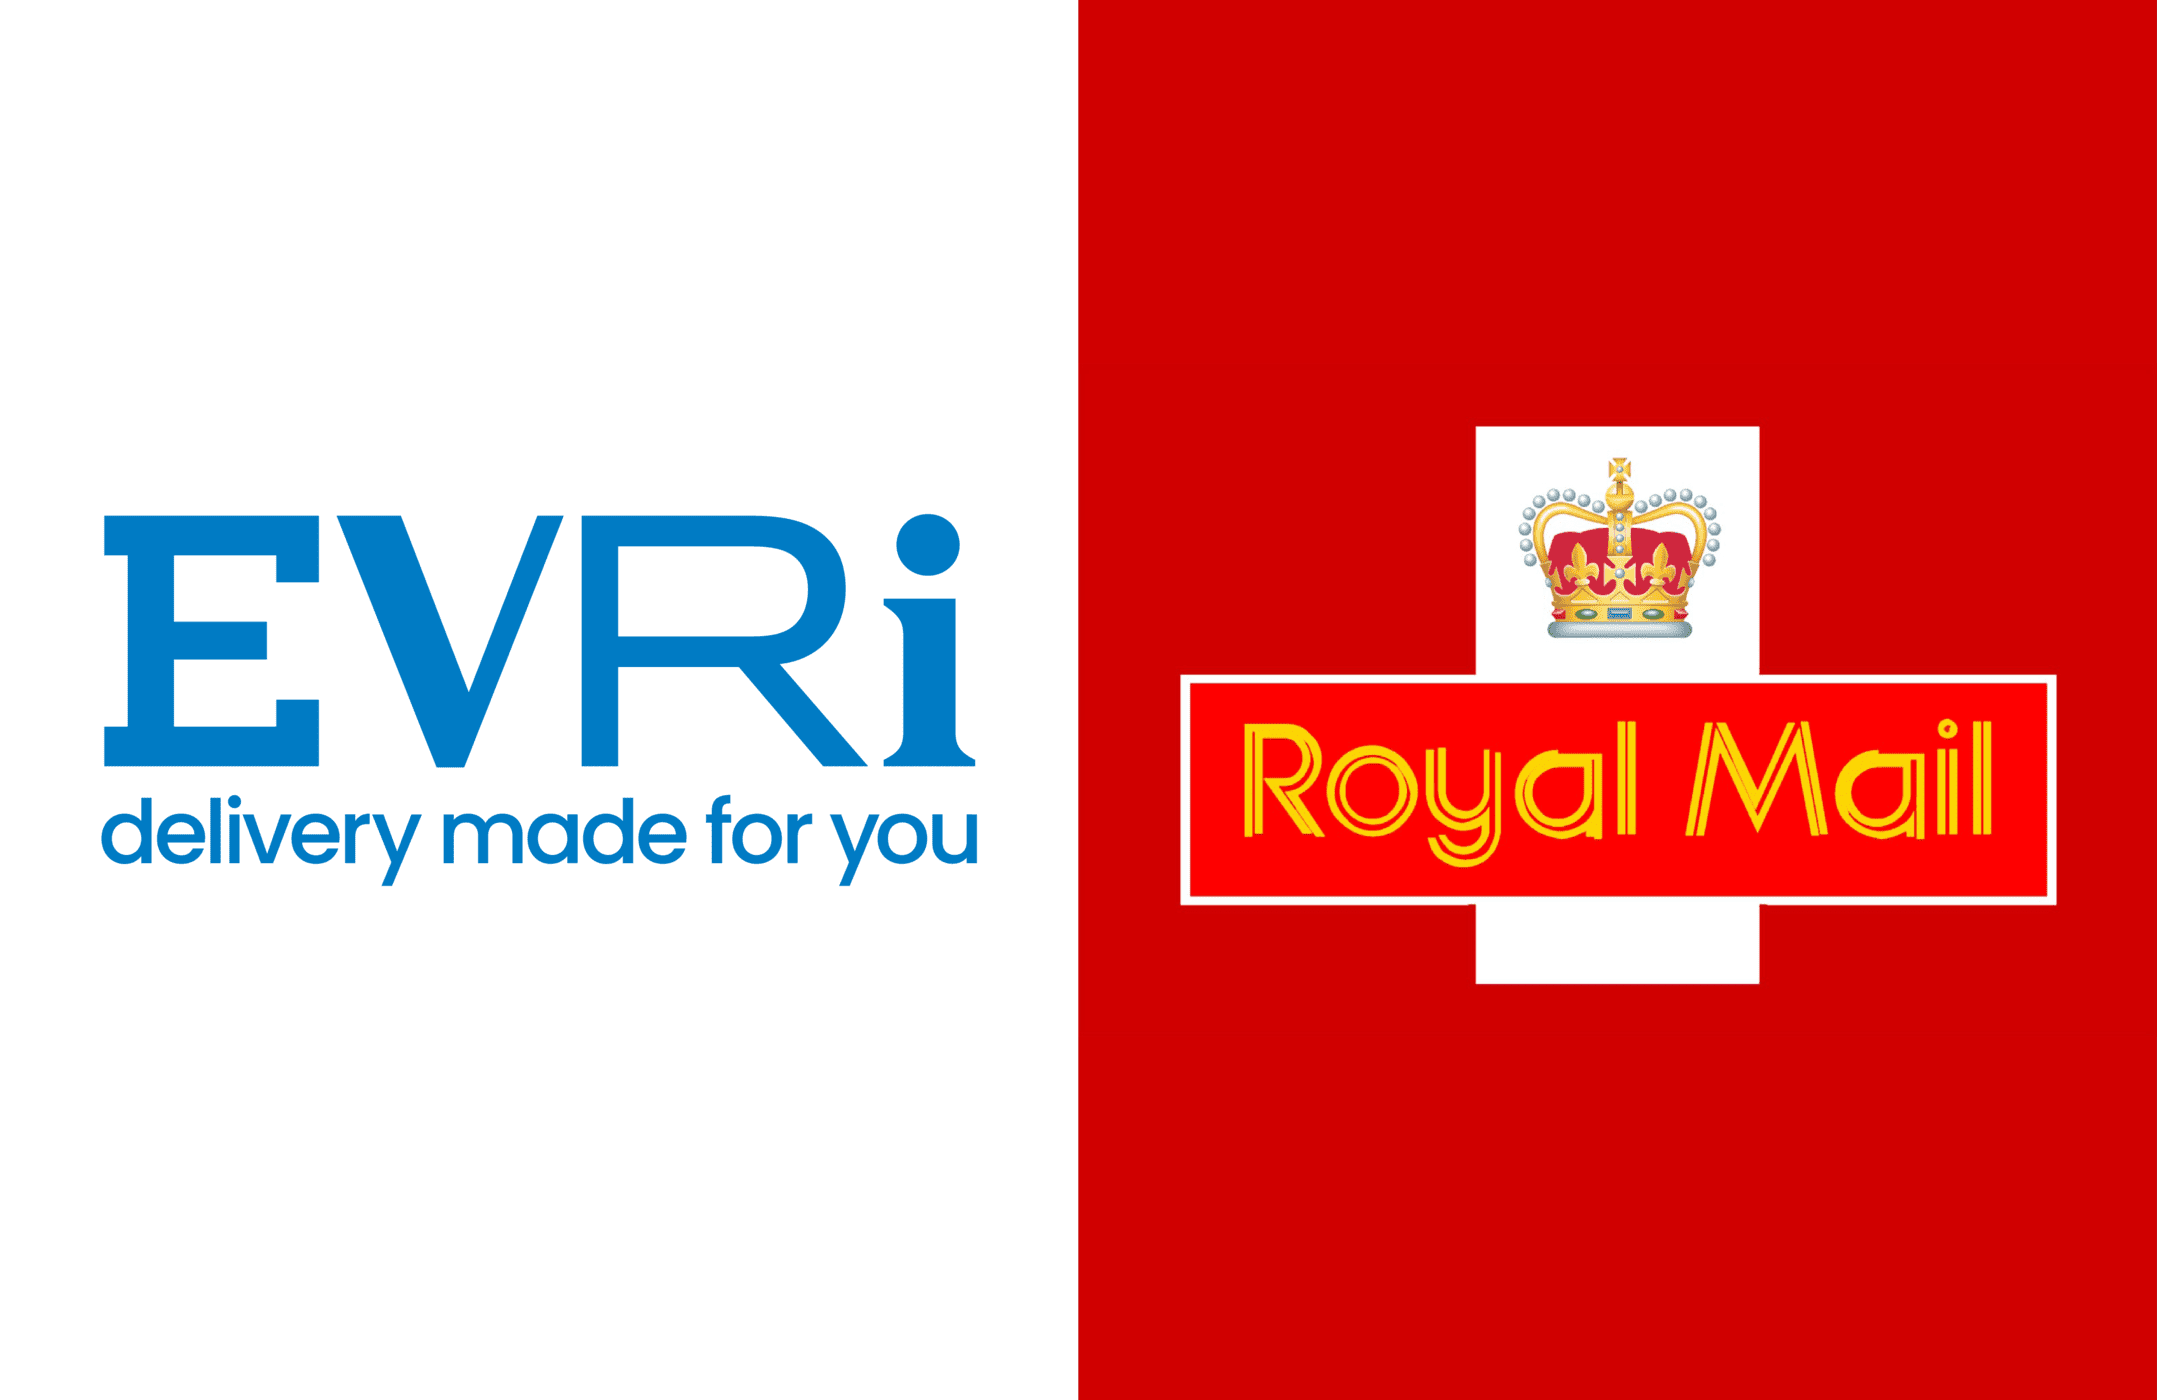 Evri vs royal mail